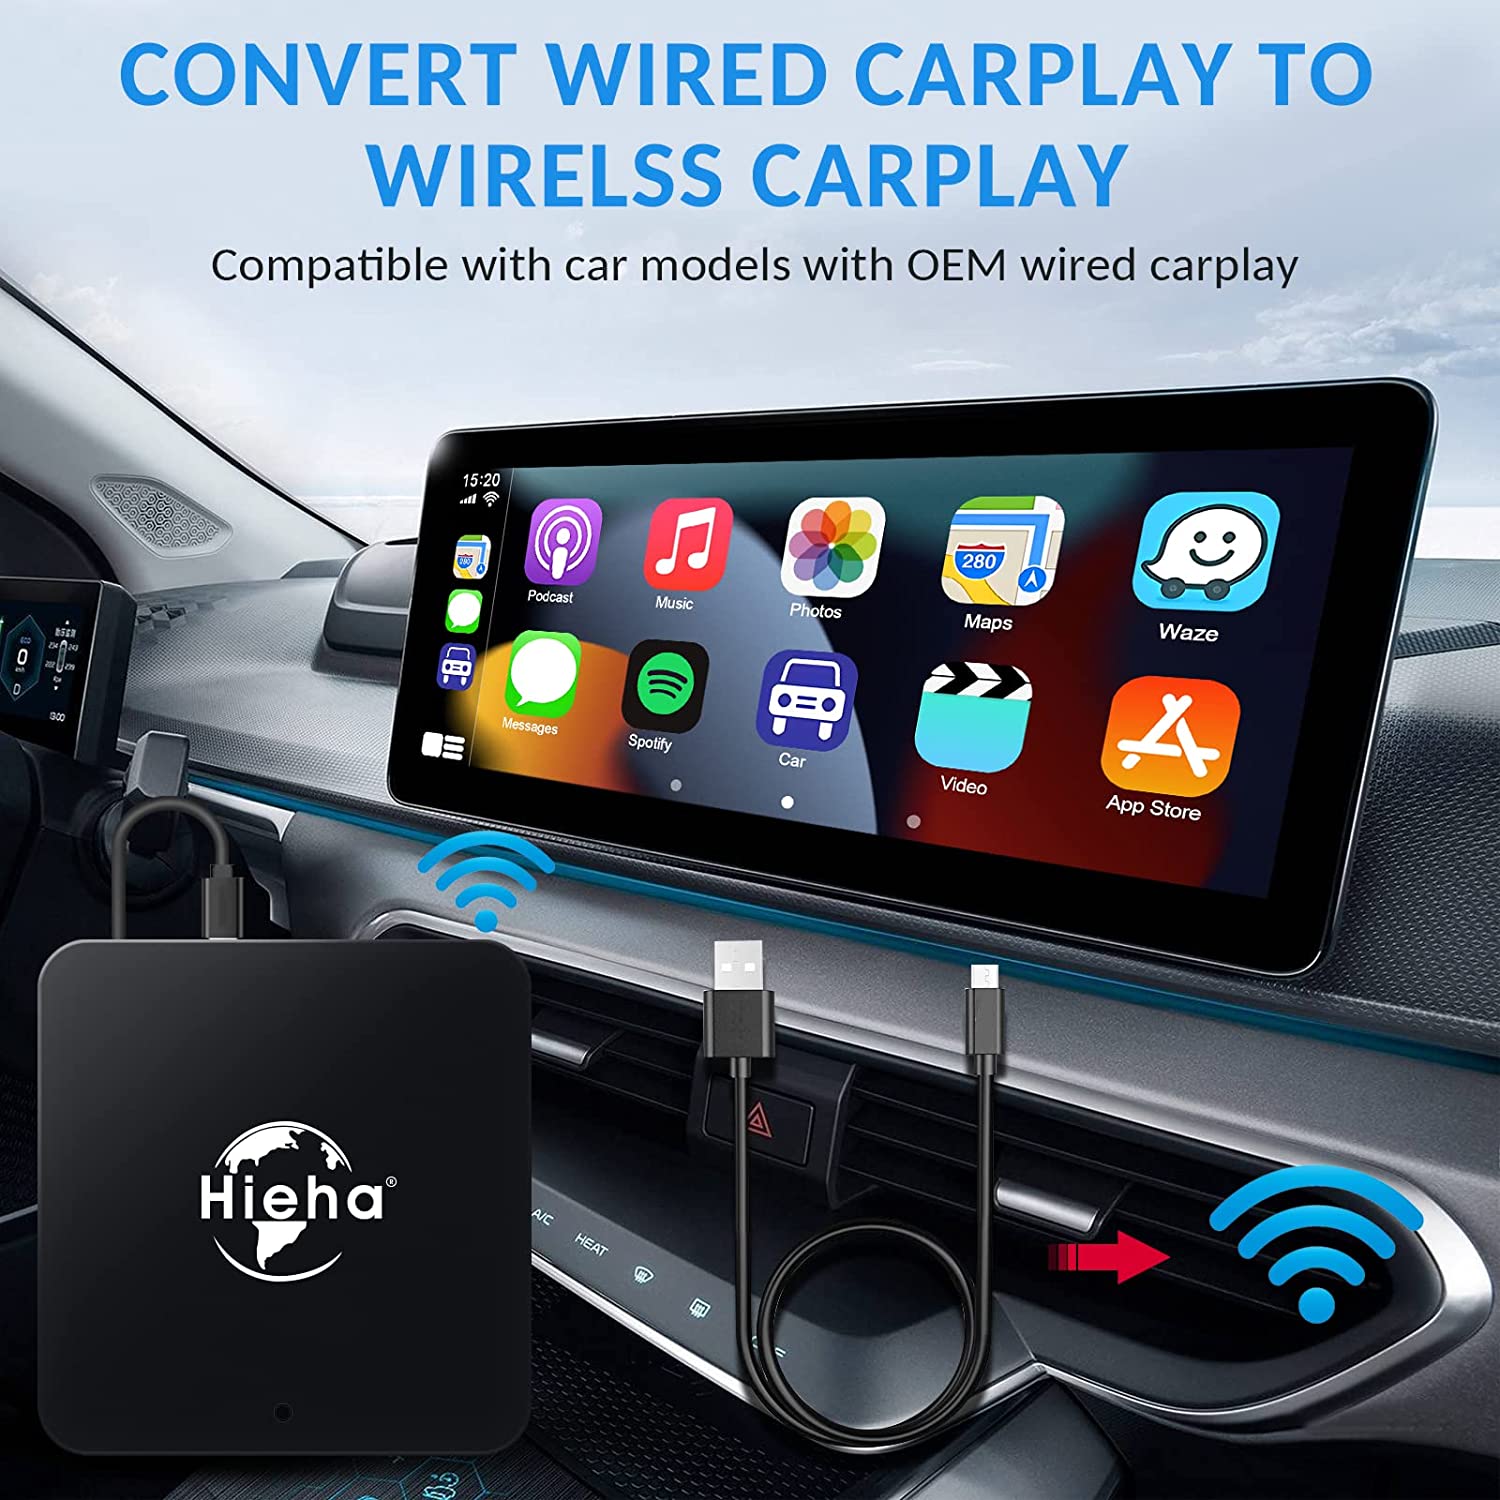 Hieha Wireless CarPlay Adapter: The Easiest Way to Add Wireless